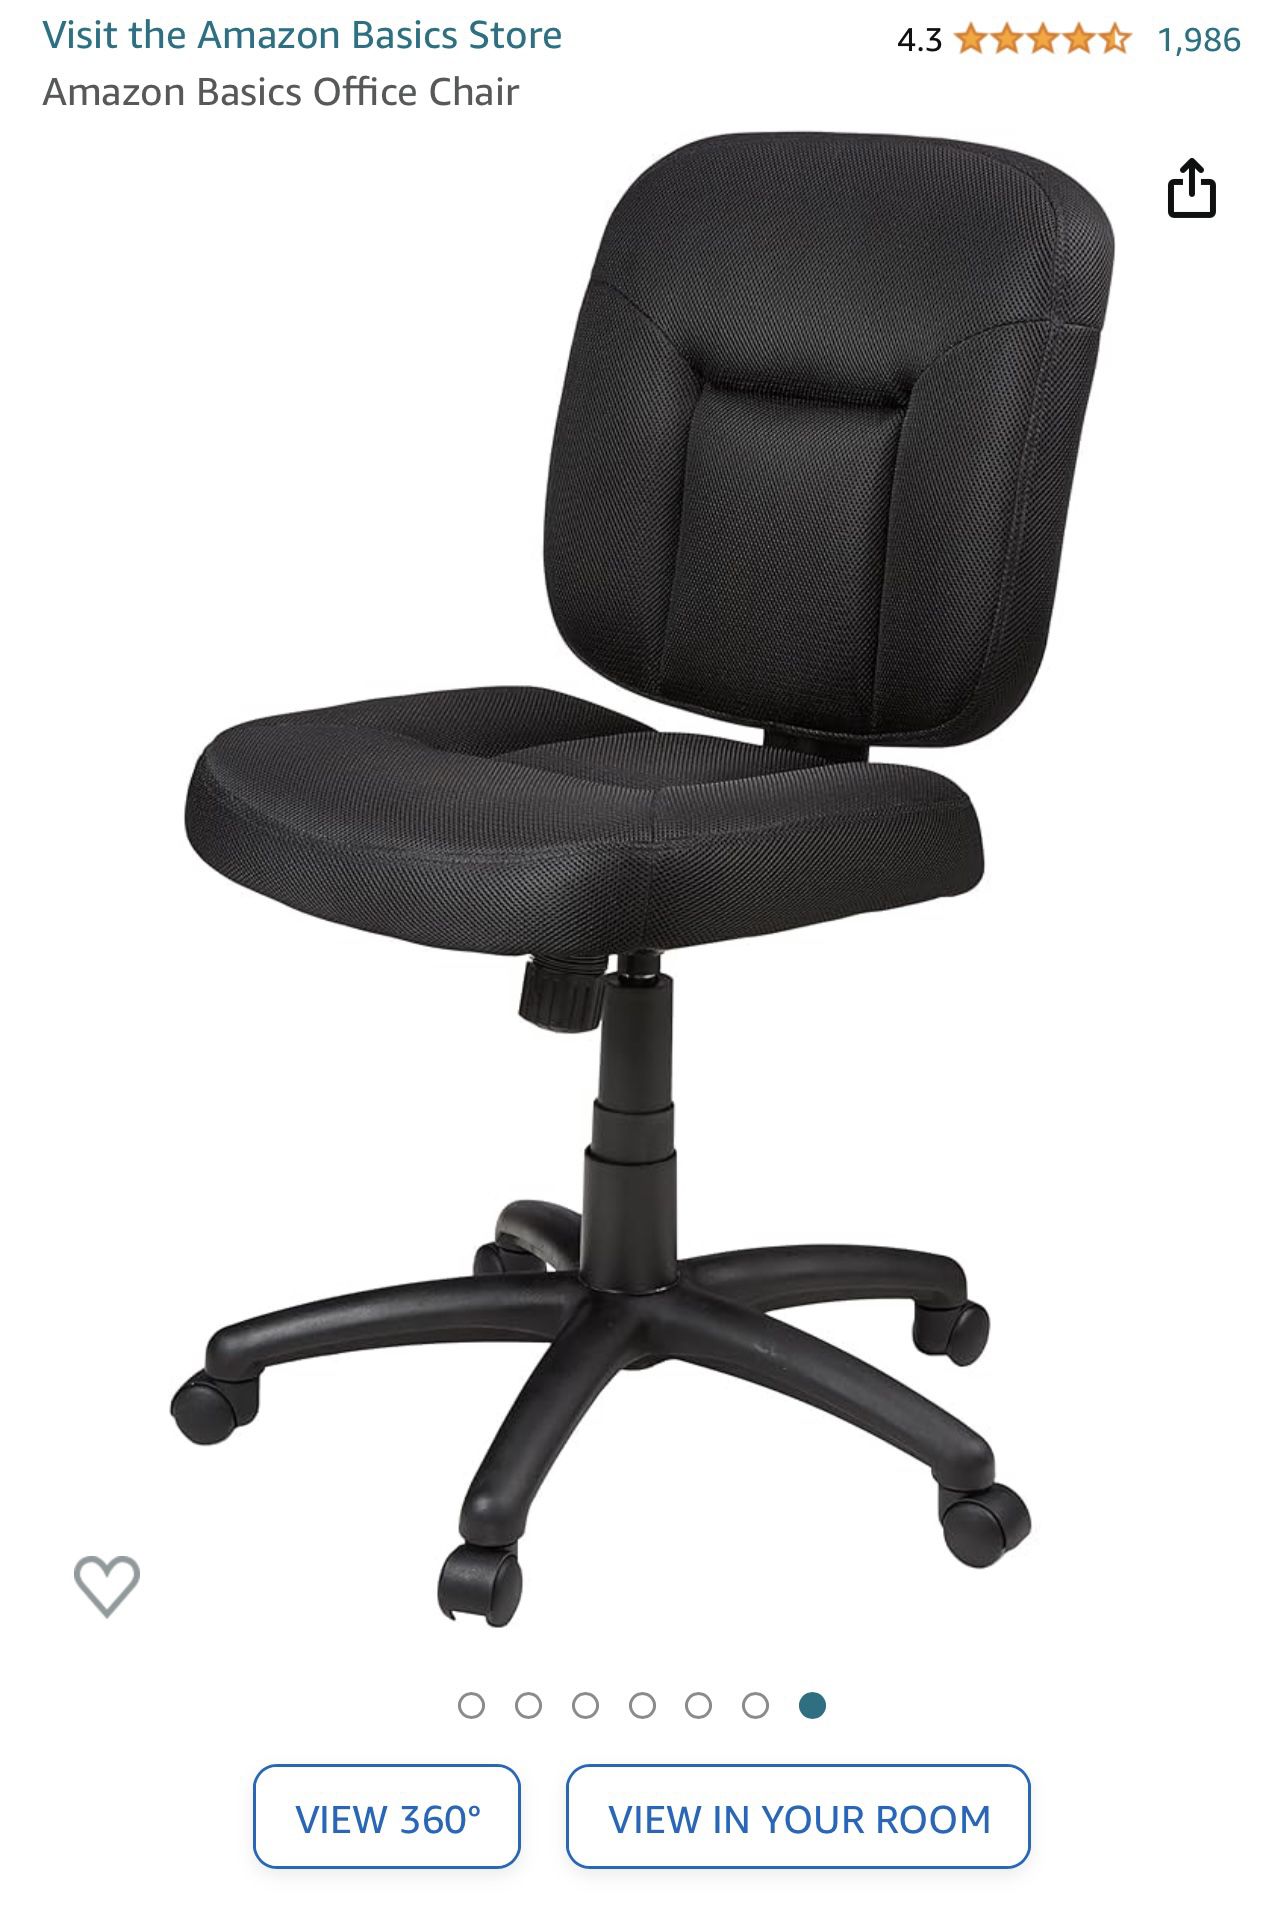 New Black Amazon Basics Office Chair